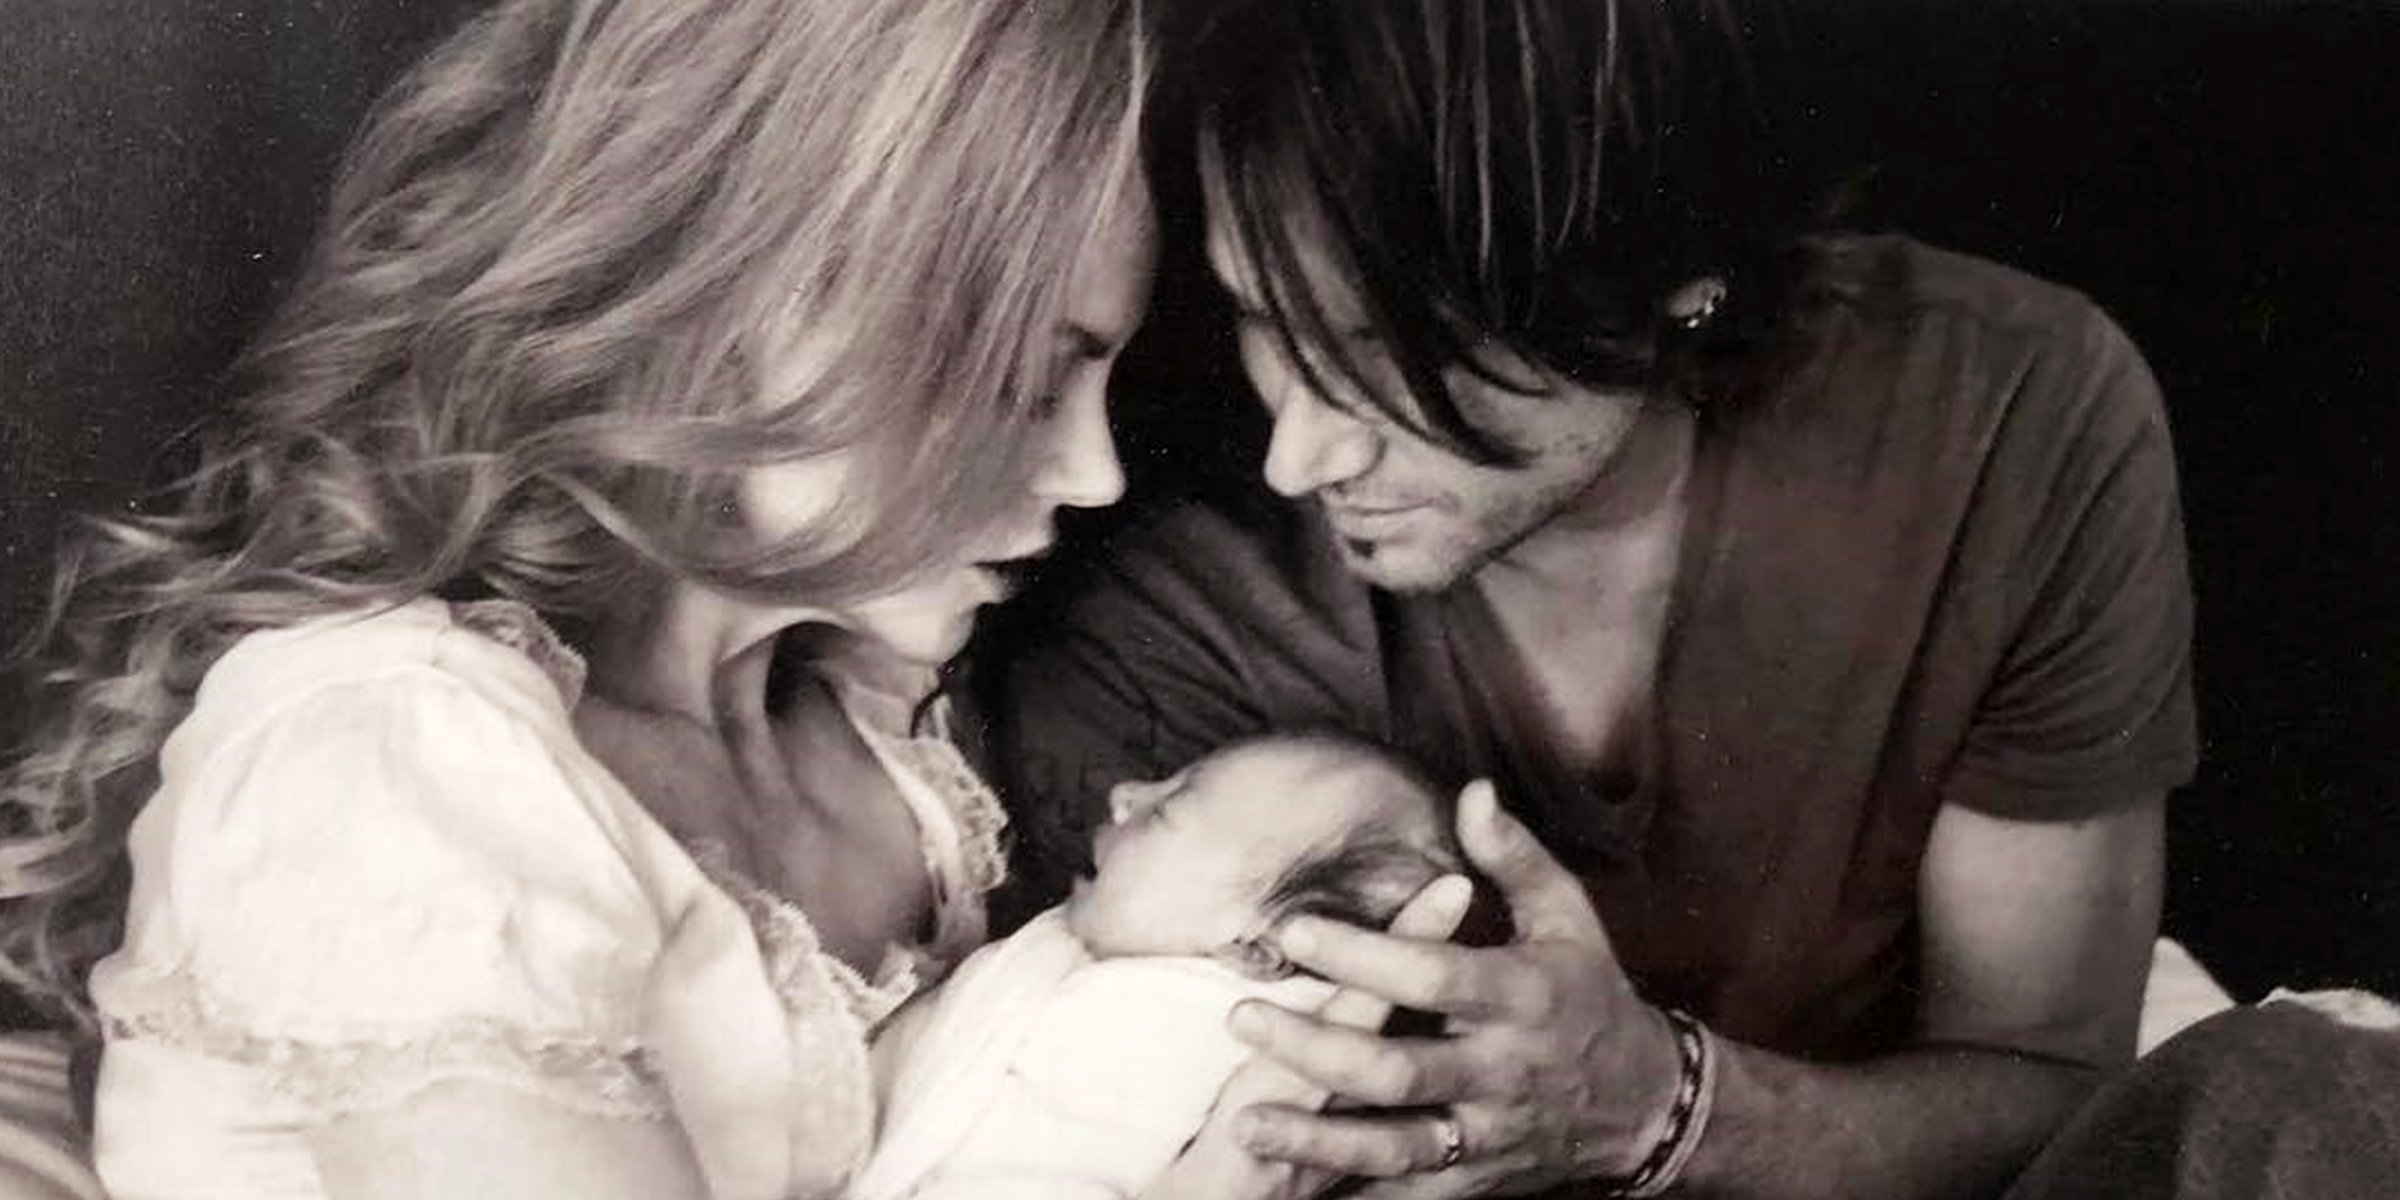 Nicole Kidman et Keith Urban avec l'une de leurs filles. | Source : Instagram/nicolekidman